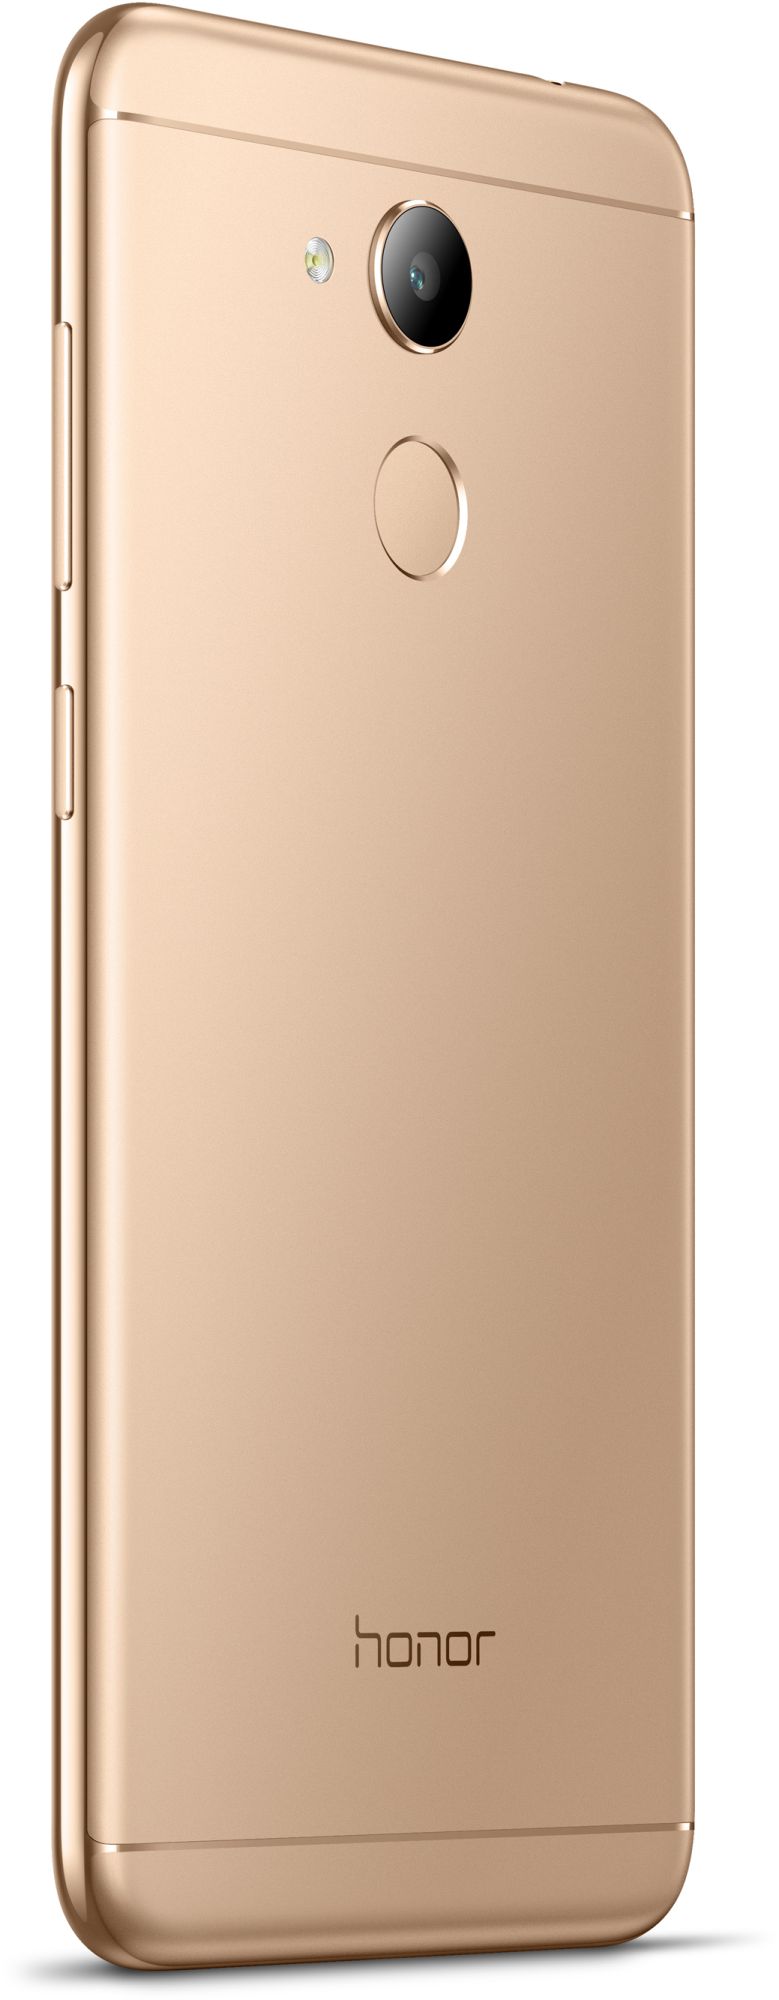 Huawei Honor 6C Pro 32GB Gold